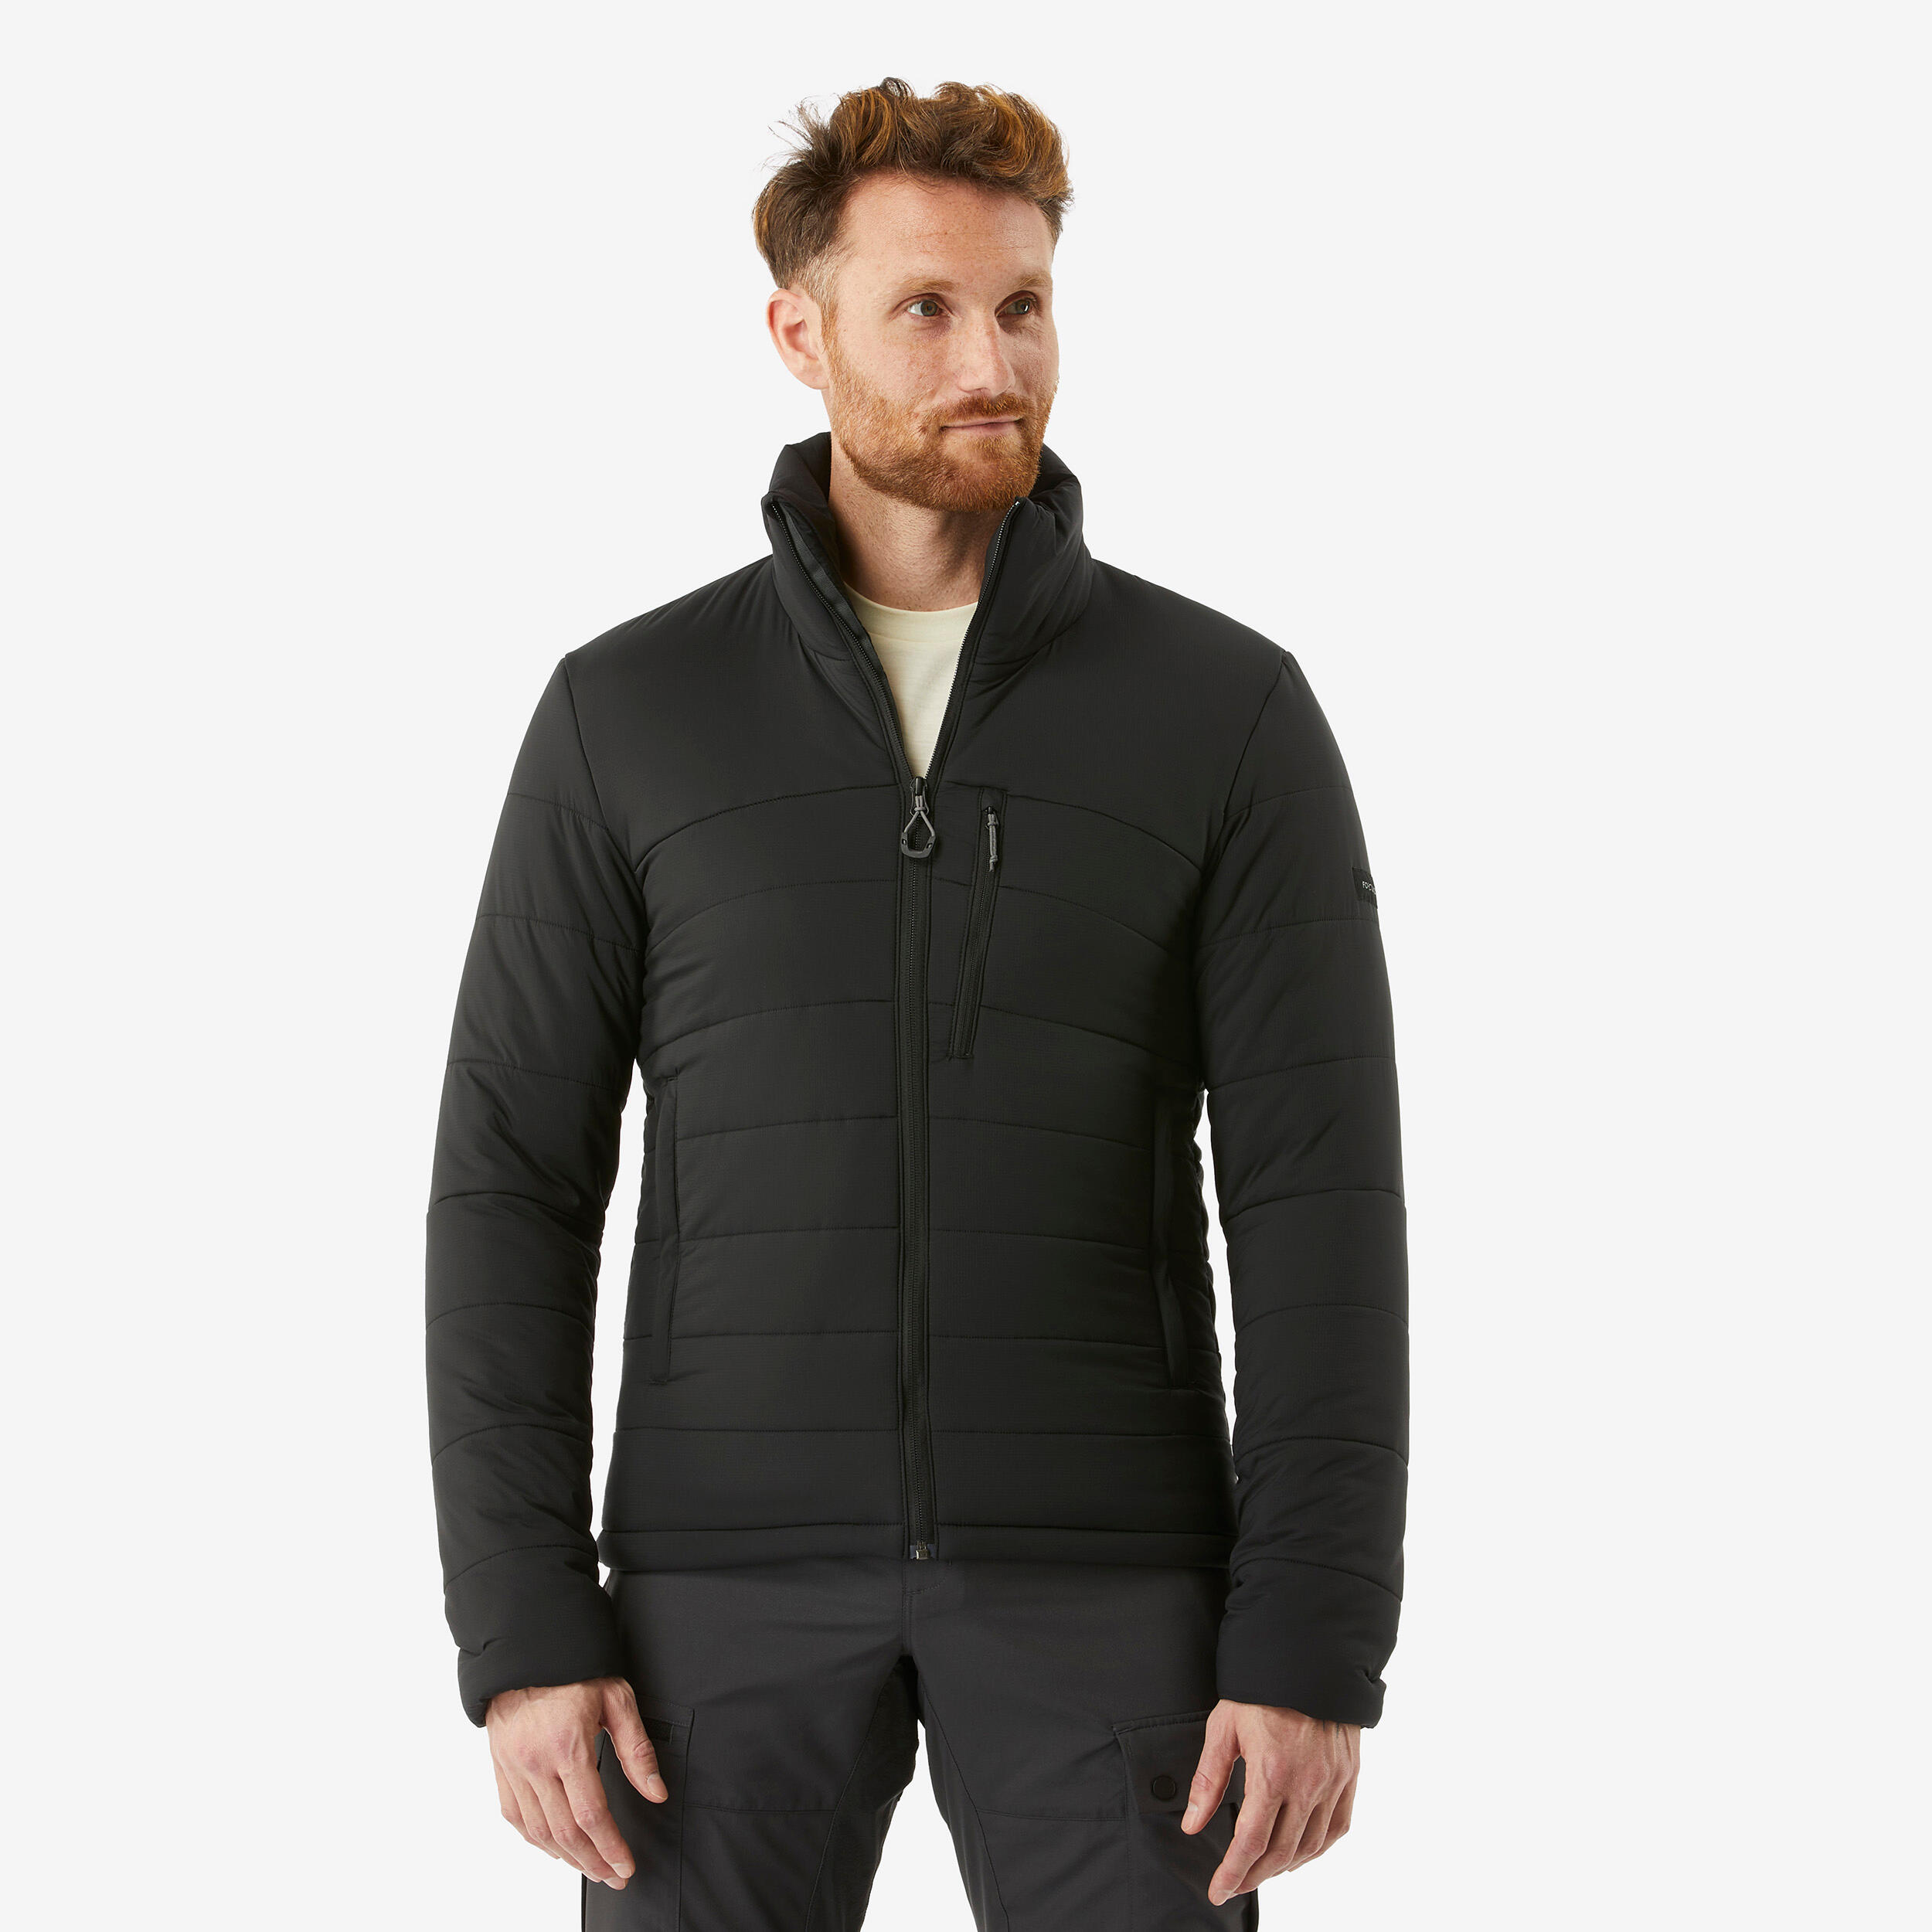 FORCLAZ Men's Synthetic Mountain Trekking Padded Jacket - TREK 500 -10°C Black